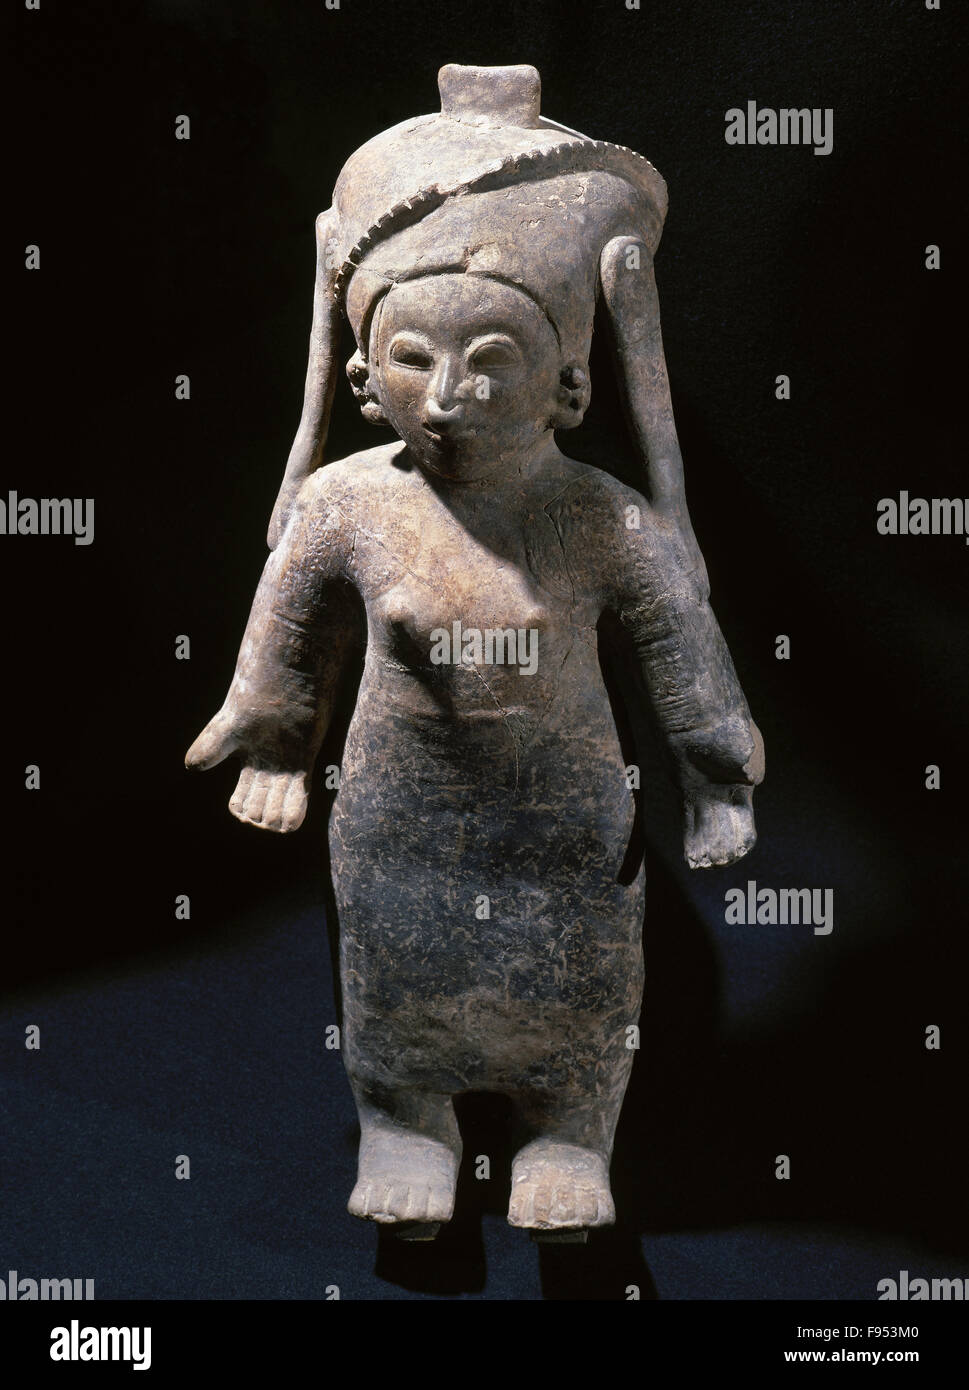 Pre-Columbian art. Pre-Incan. Tumaco-Tolita culture. Region of the Pacific Colombo-Ecuadorian coast from 300BC-600 AD. Ceramic object. Female figure. 44 x 22 cm. From Ecuador. Private collection. Stock Photo